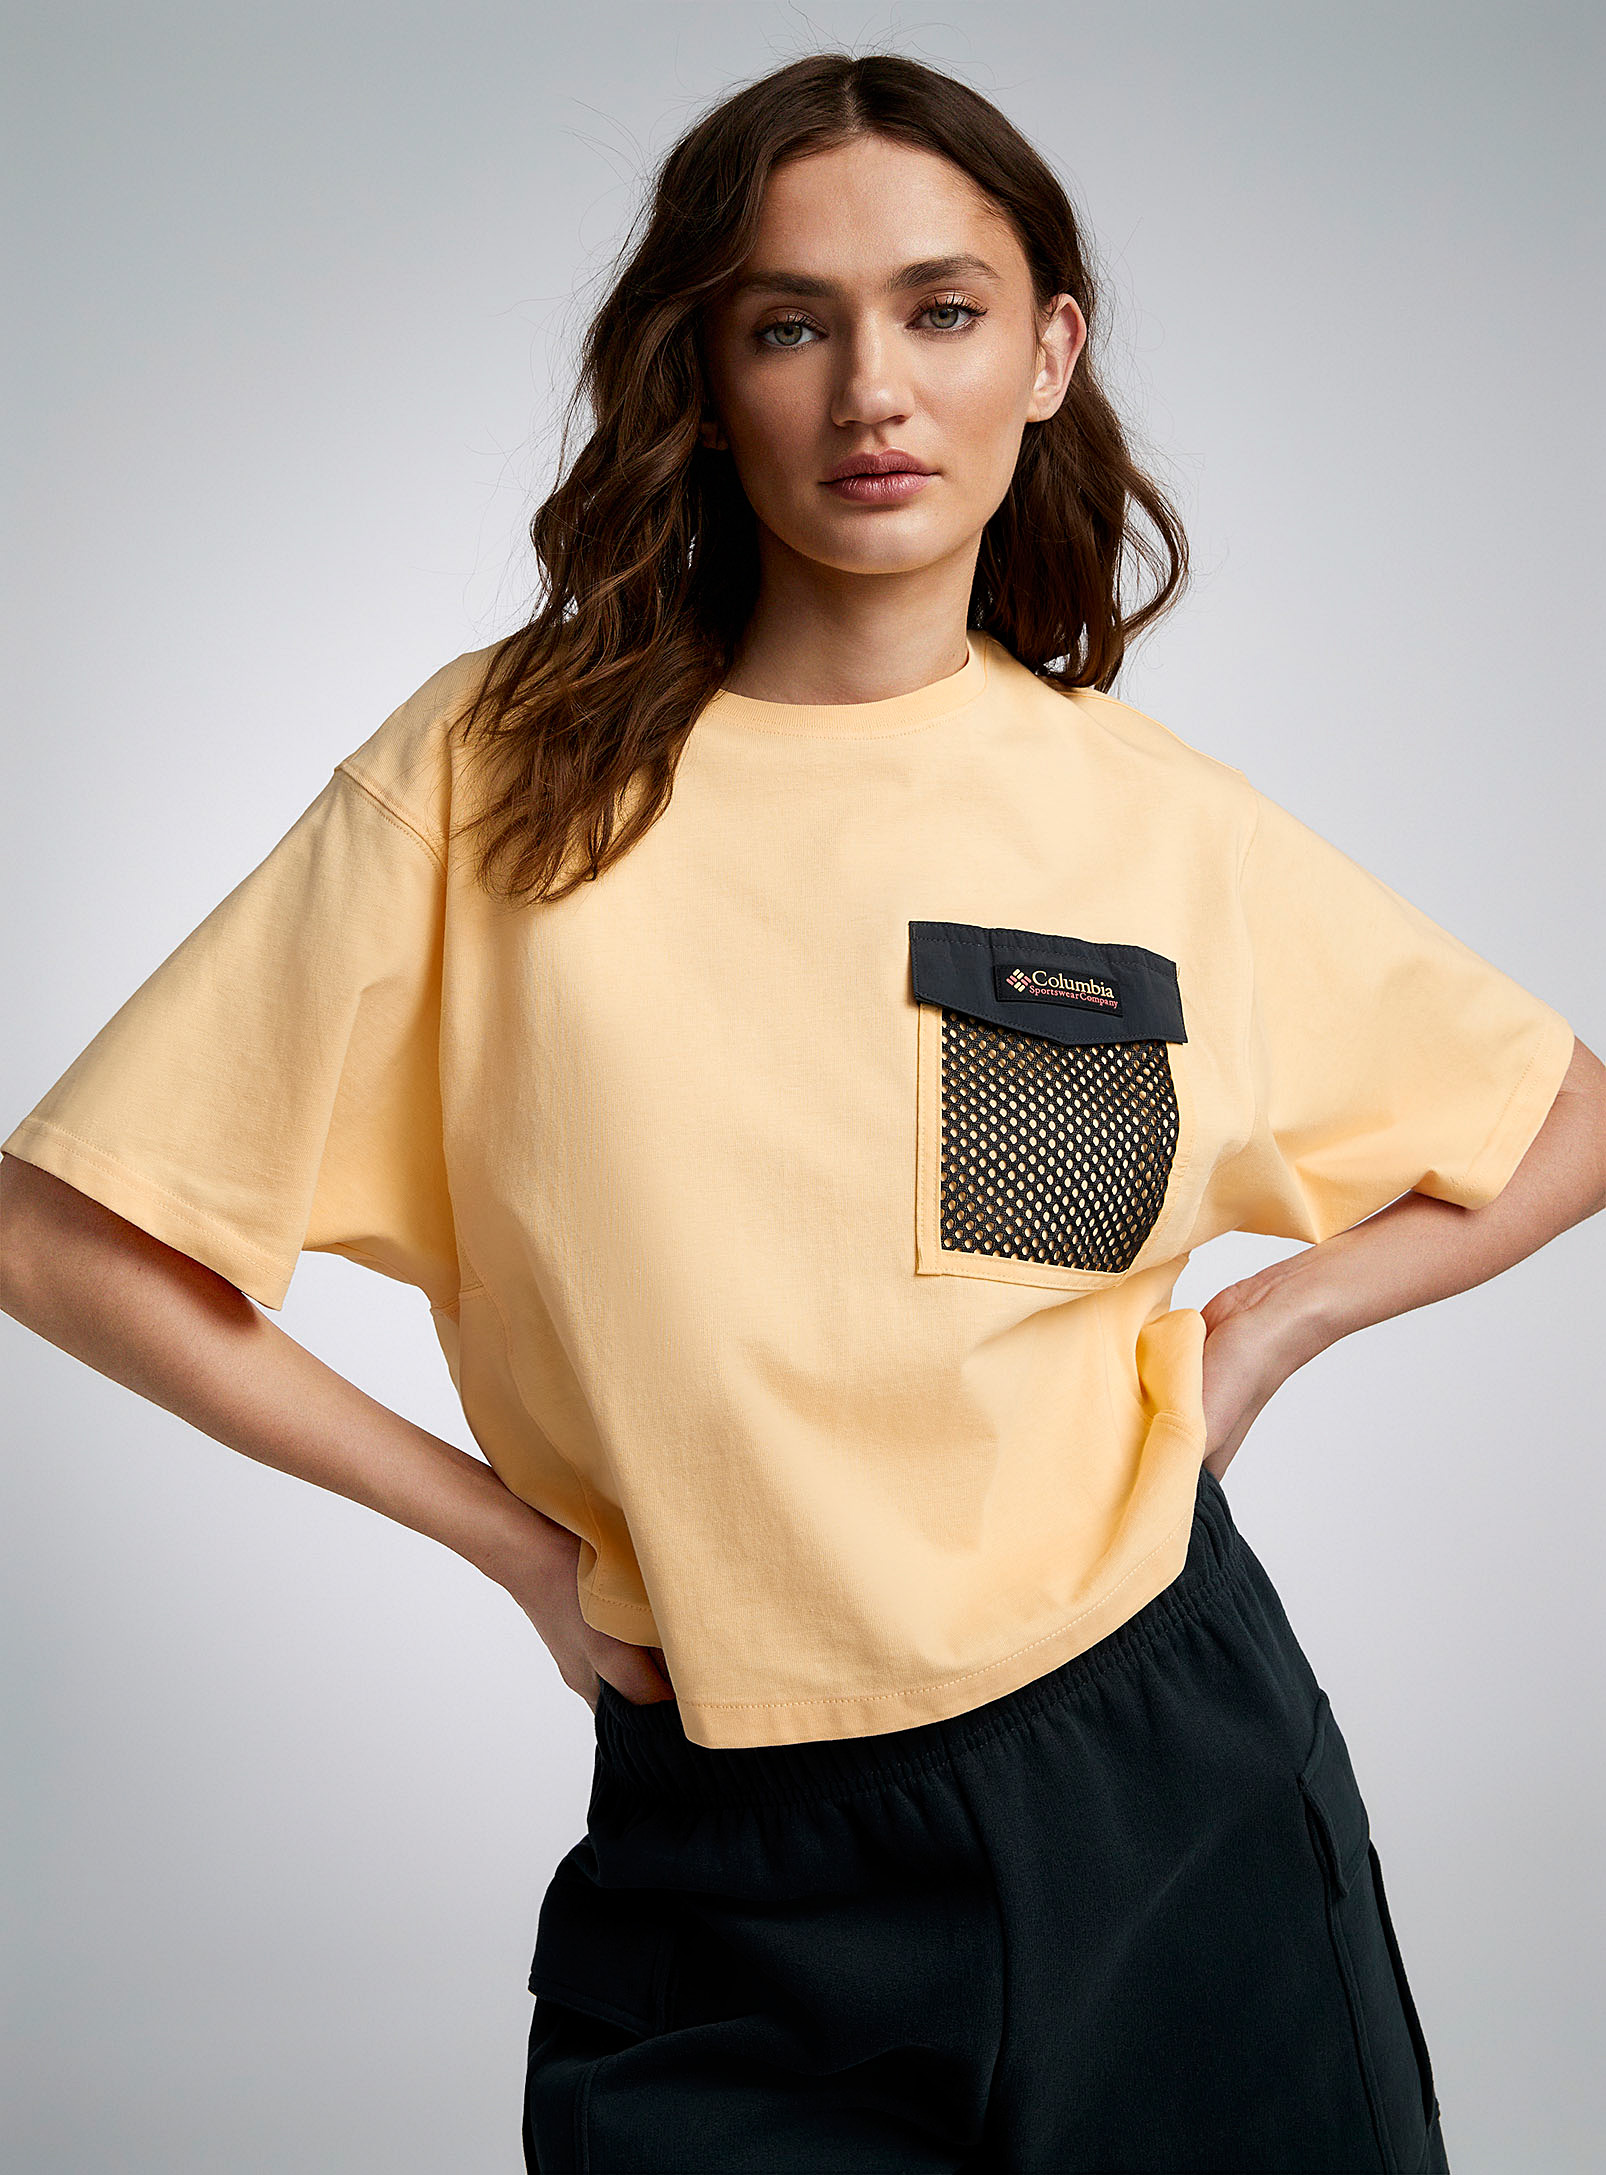 Columbia - Le t-shirt jaune pochette filet